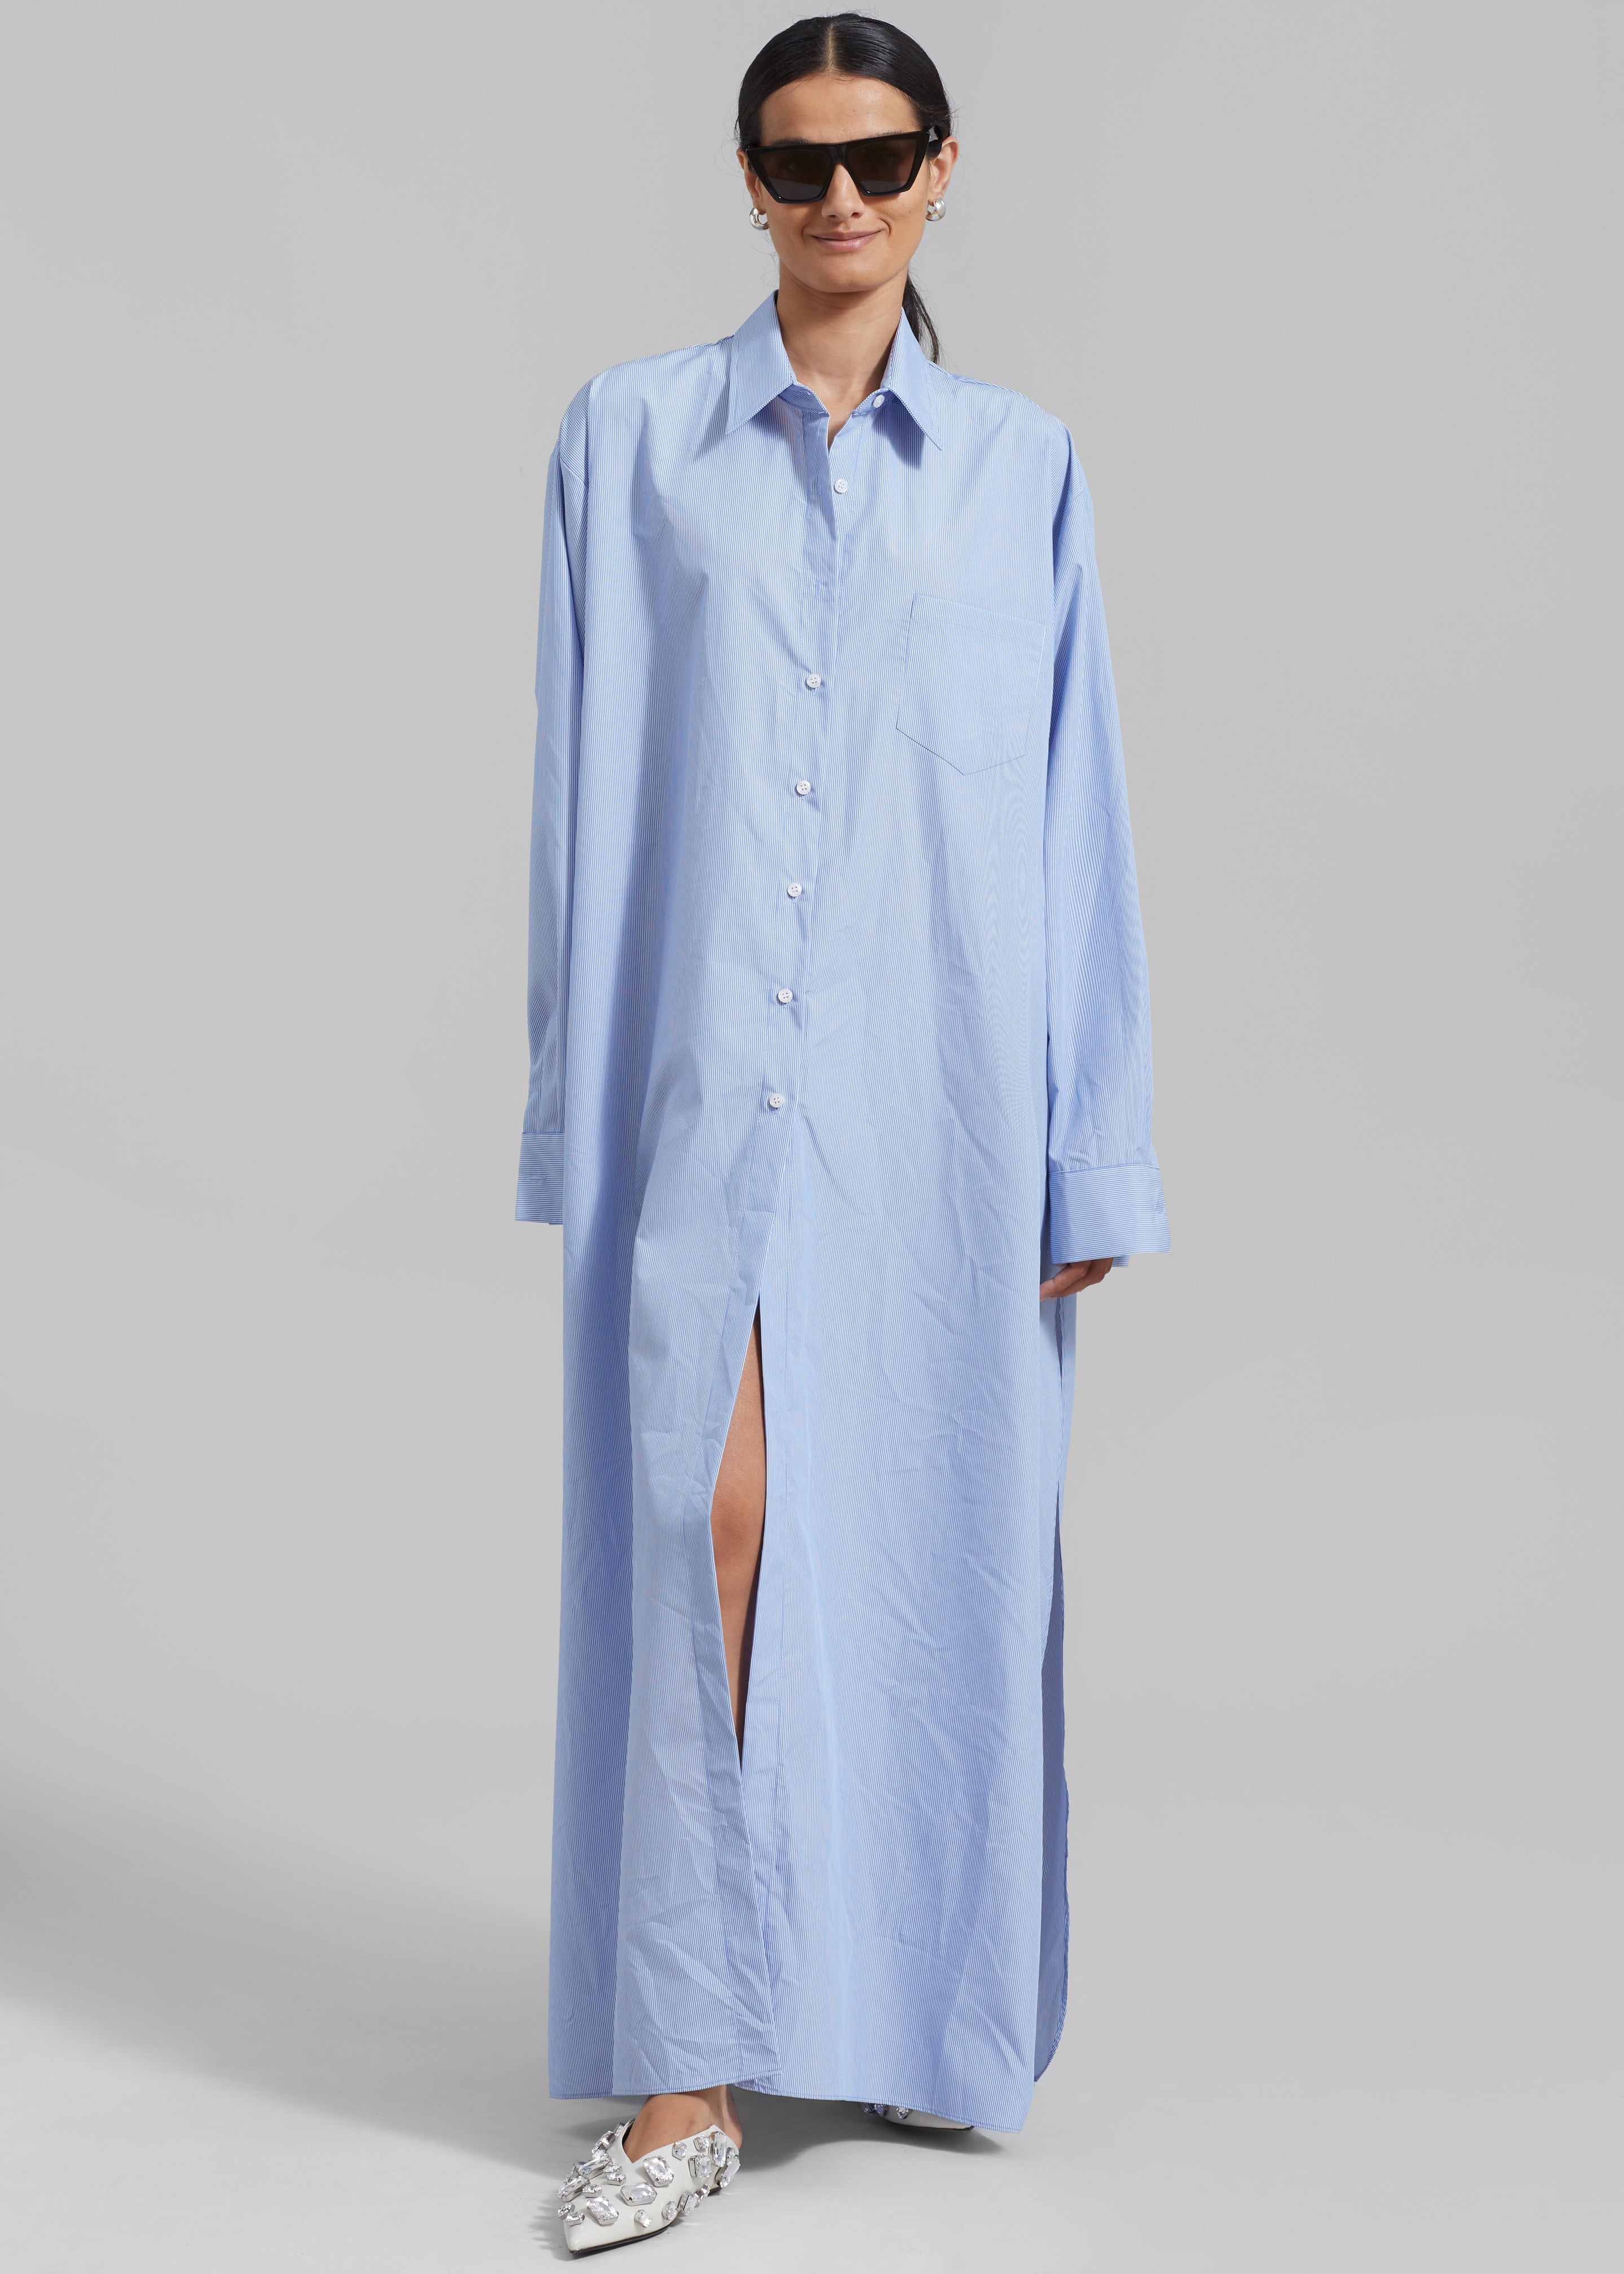 Avery Shirt Dress - Blue Stripe - 8